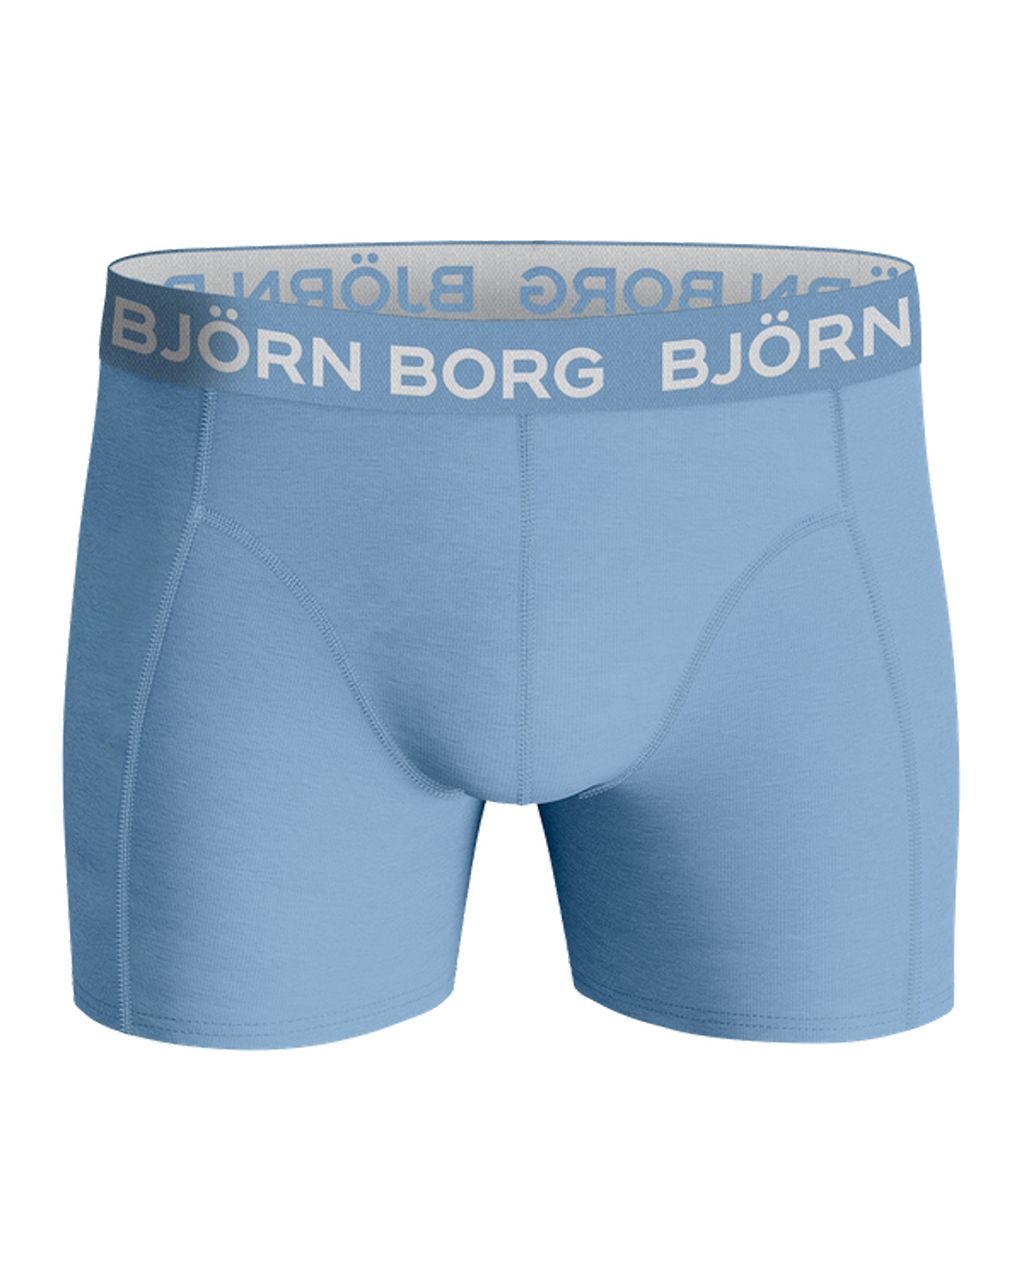 Björn Borg Boxershort Blauw 078686-001-L